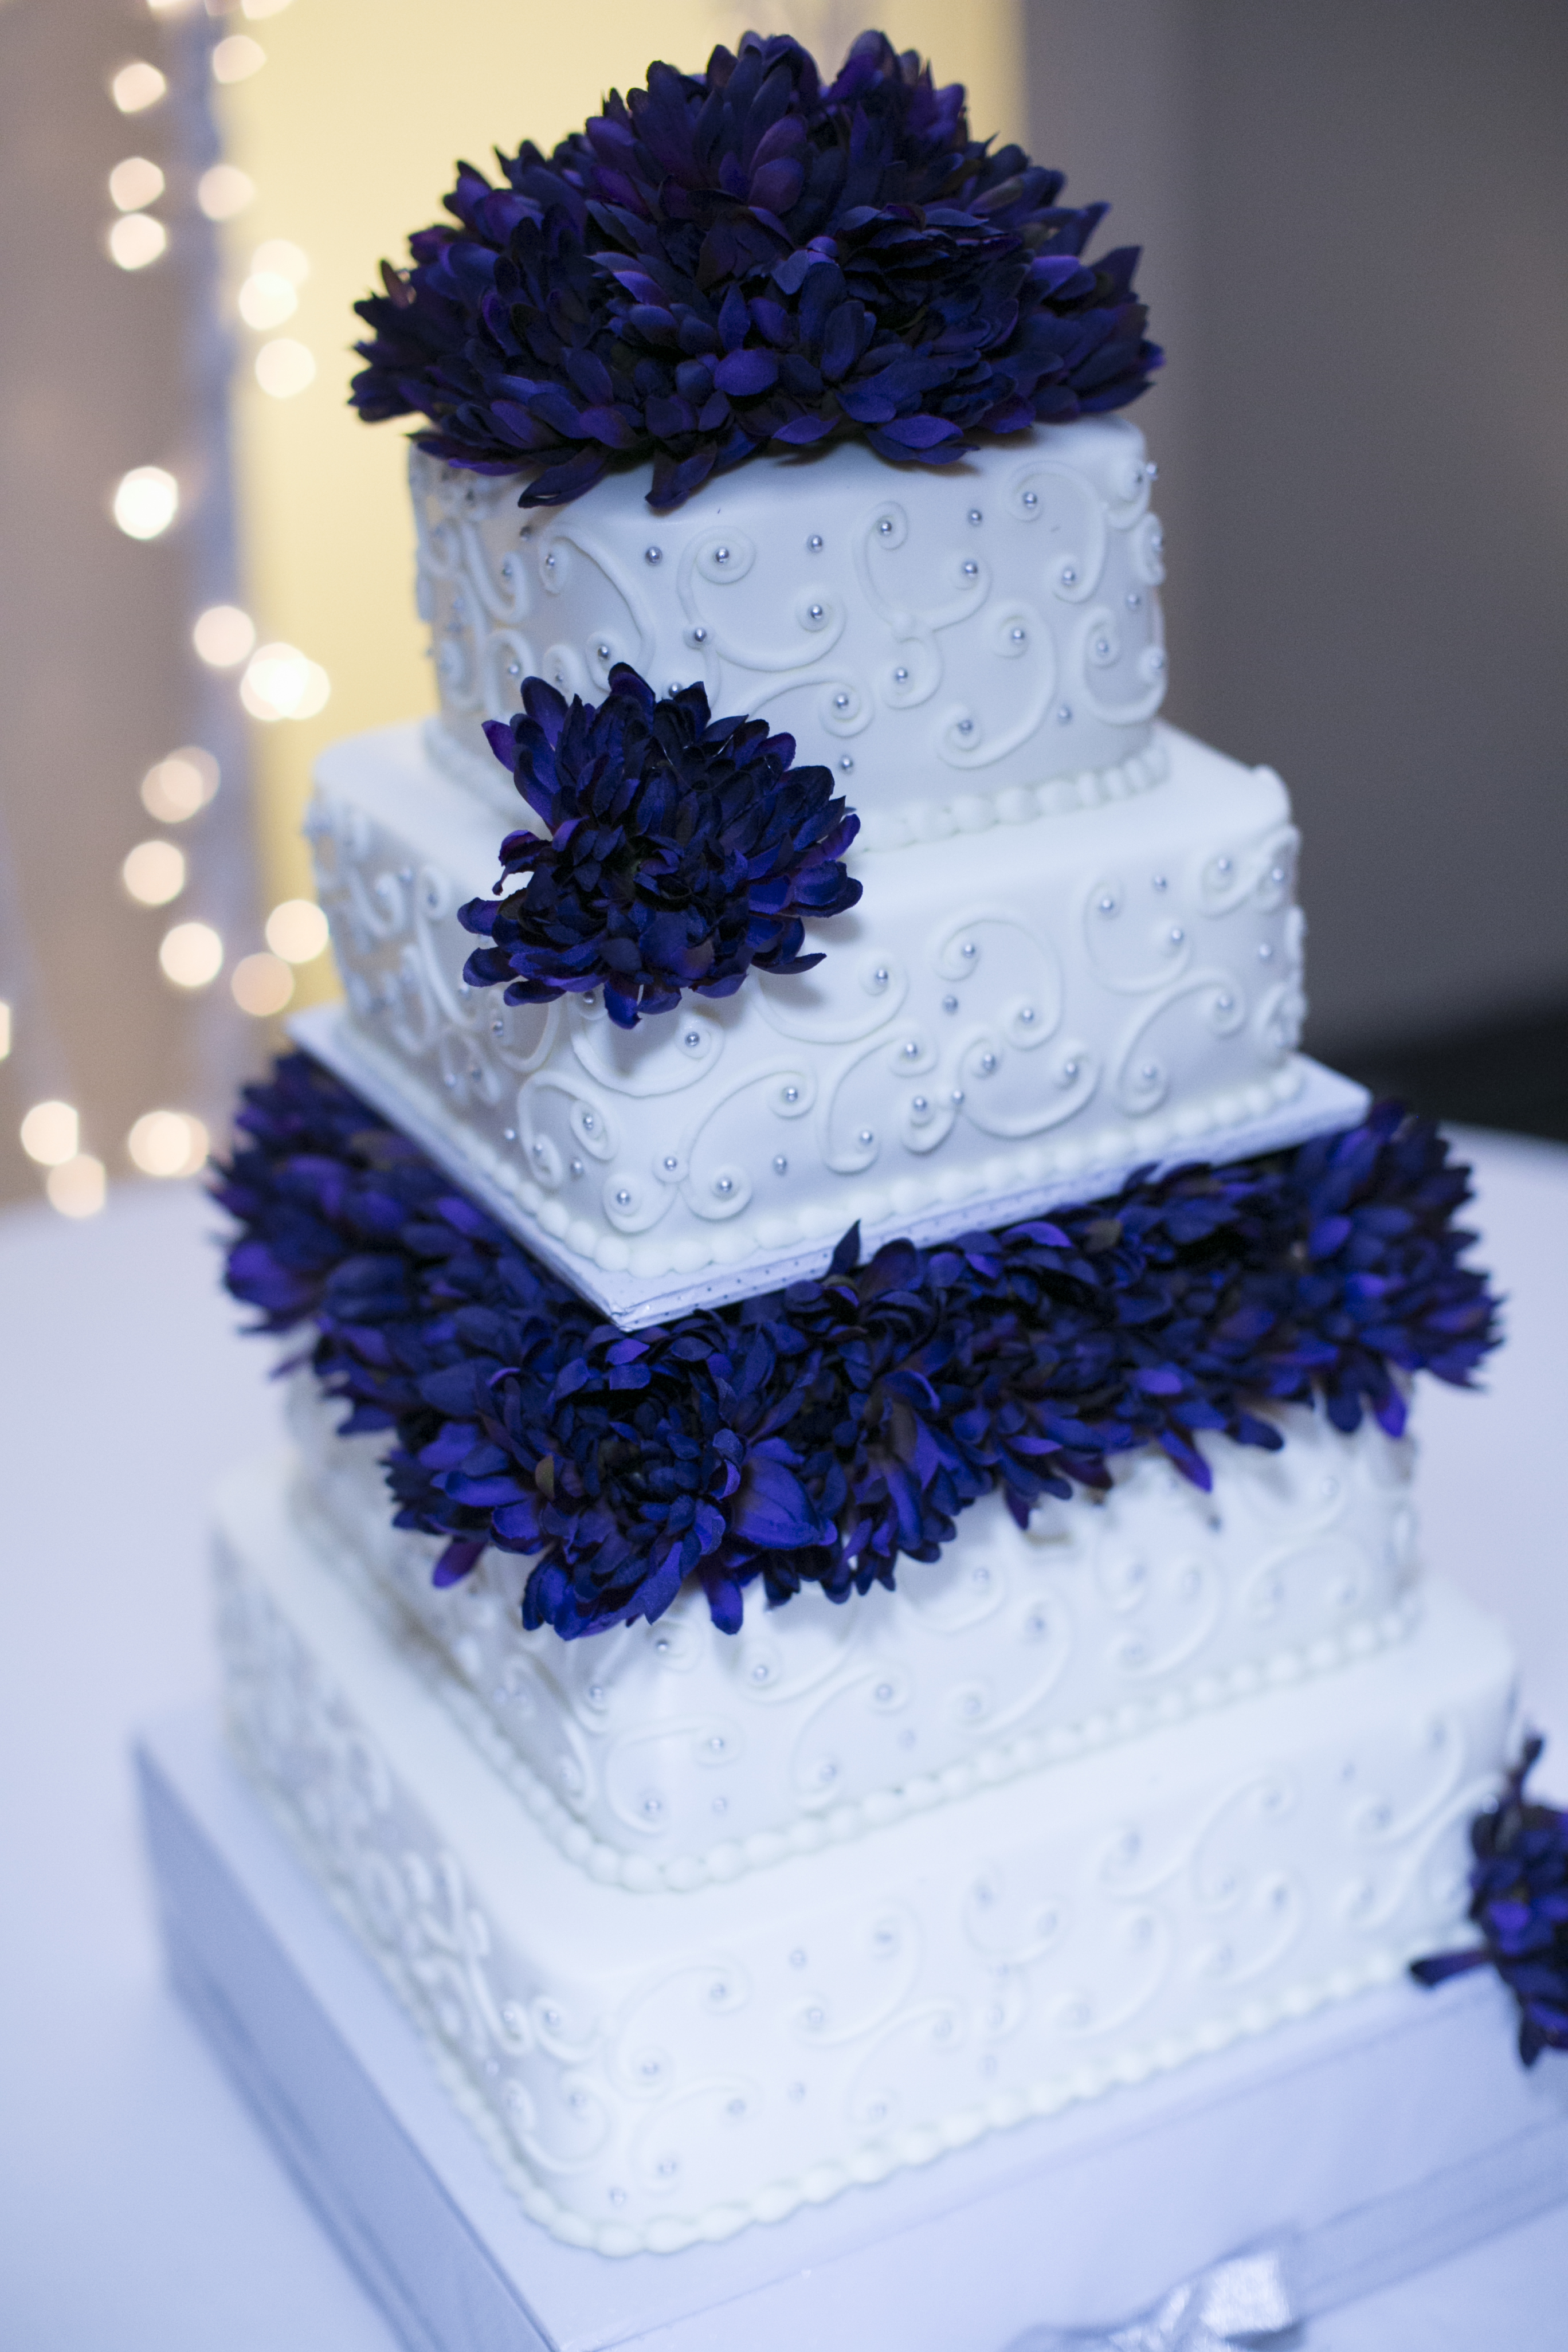 anita-kline-wedding-cake-purple-white-columbus-ohio